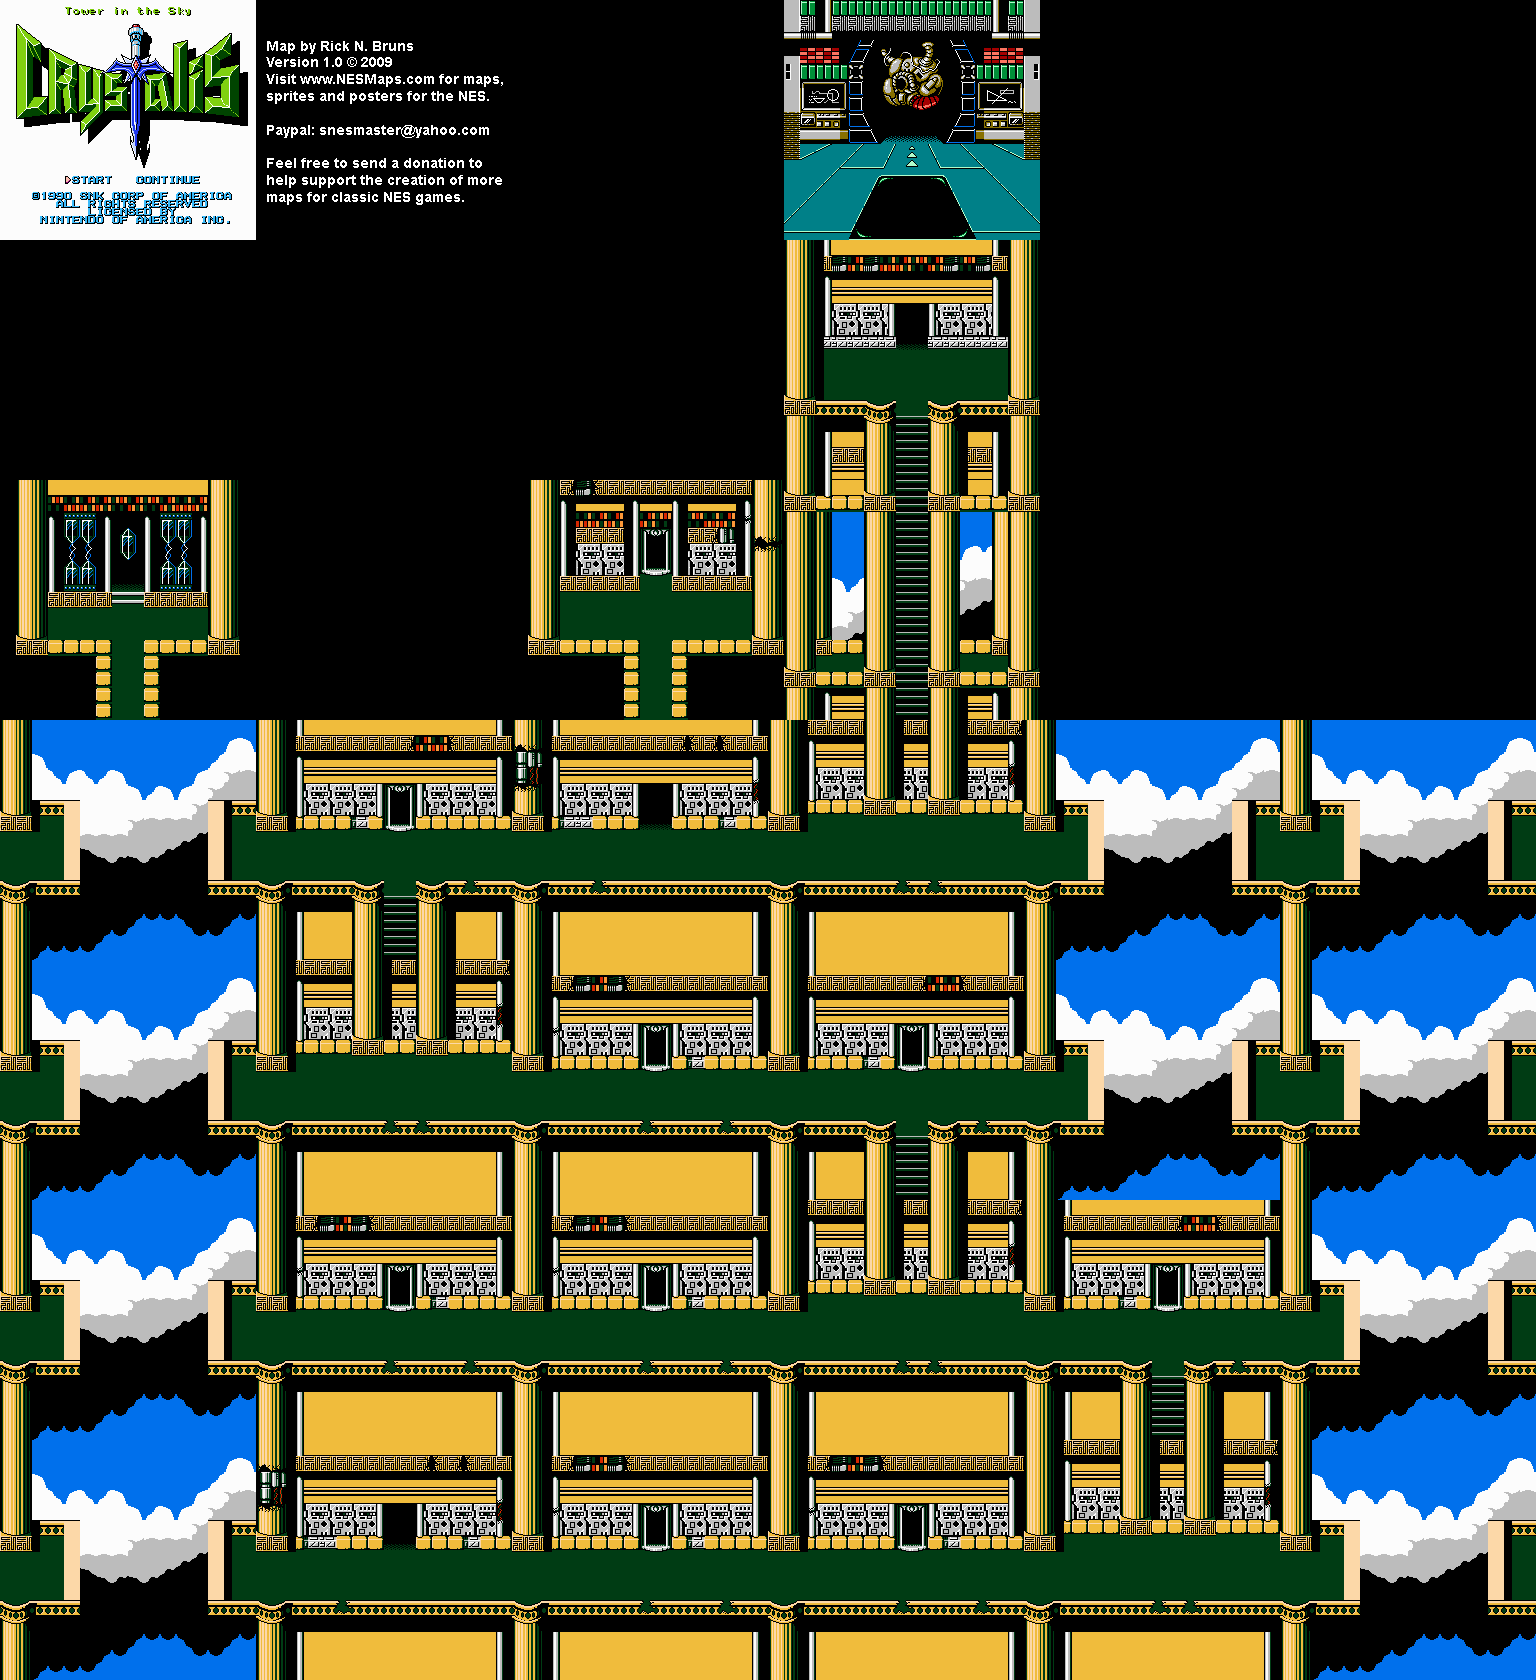 Crystalis - Tower in the Sky Nintendo NES Map BG